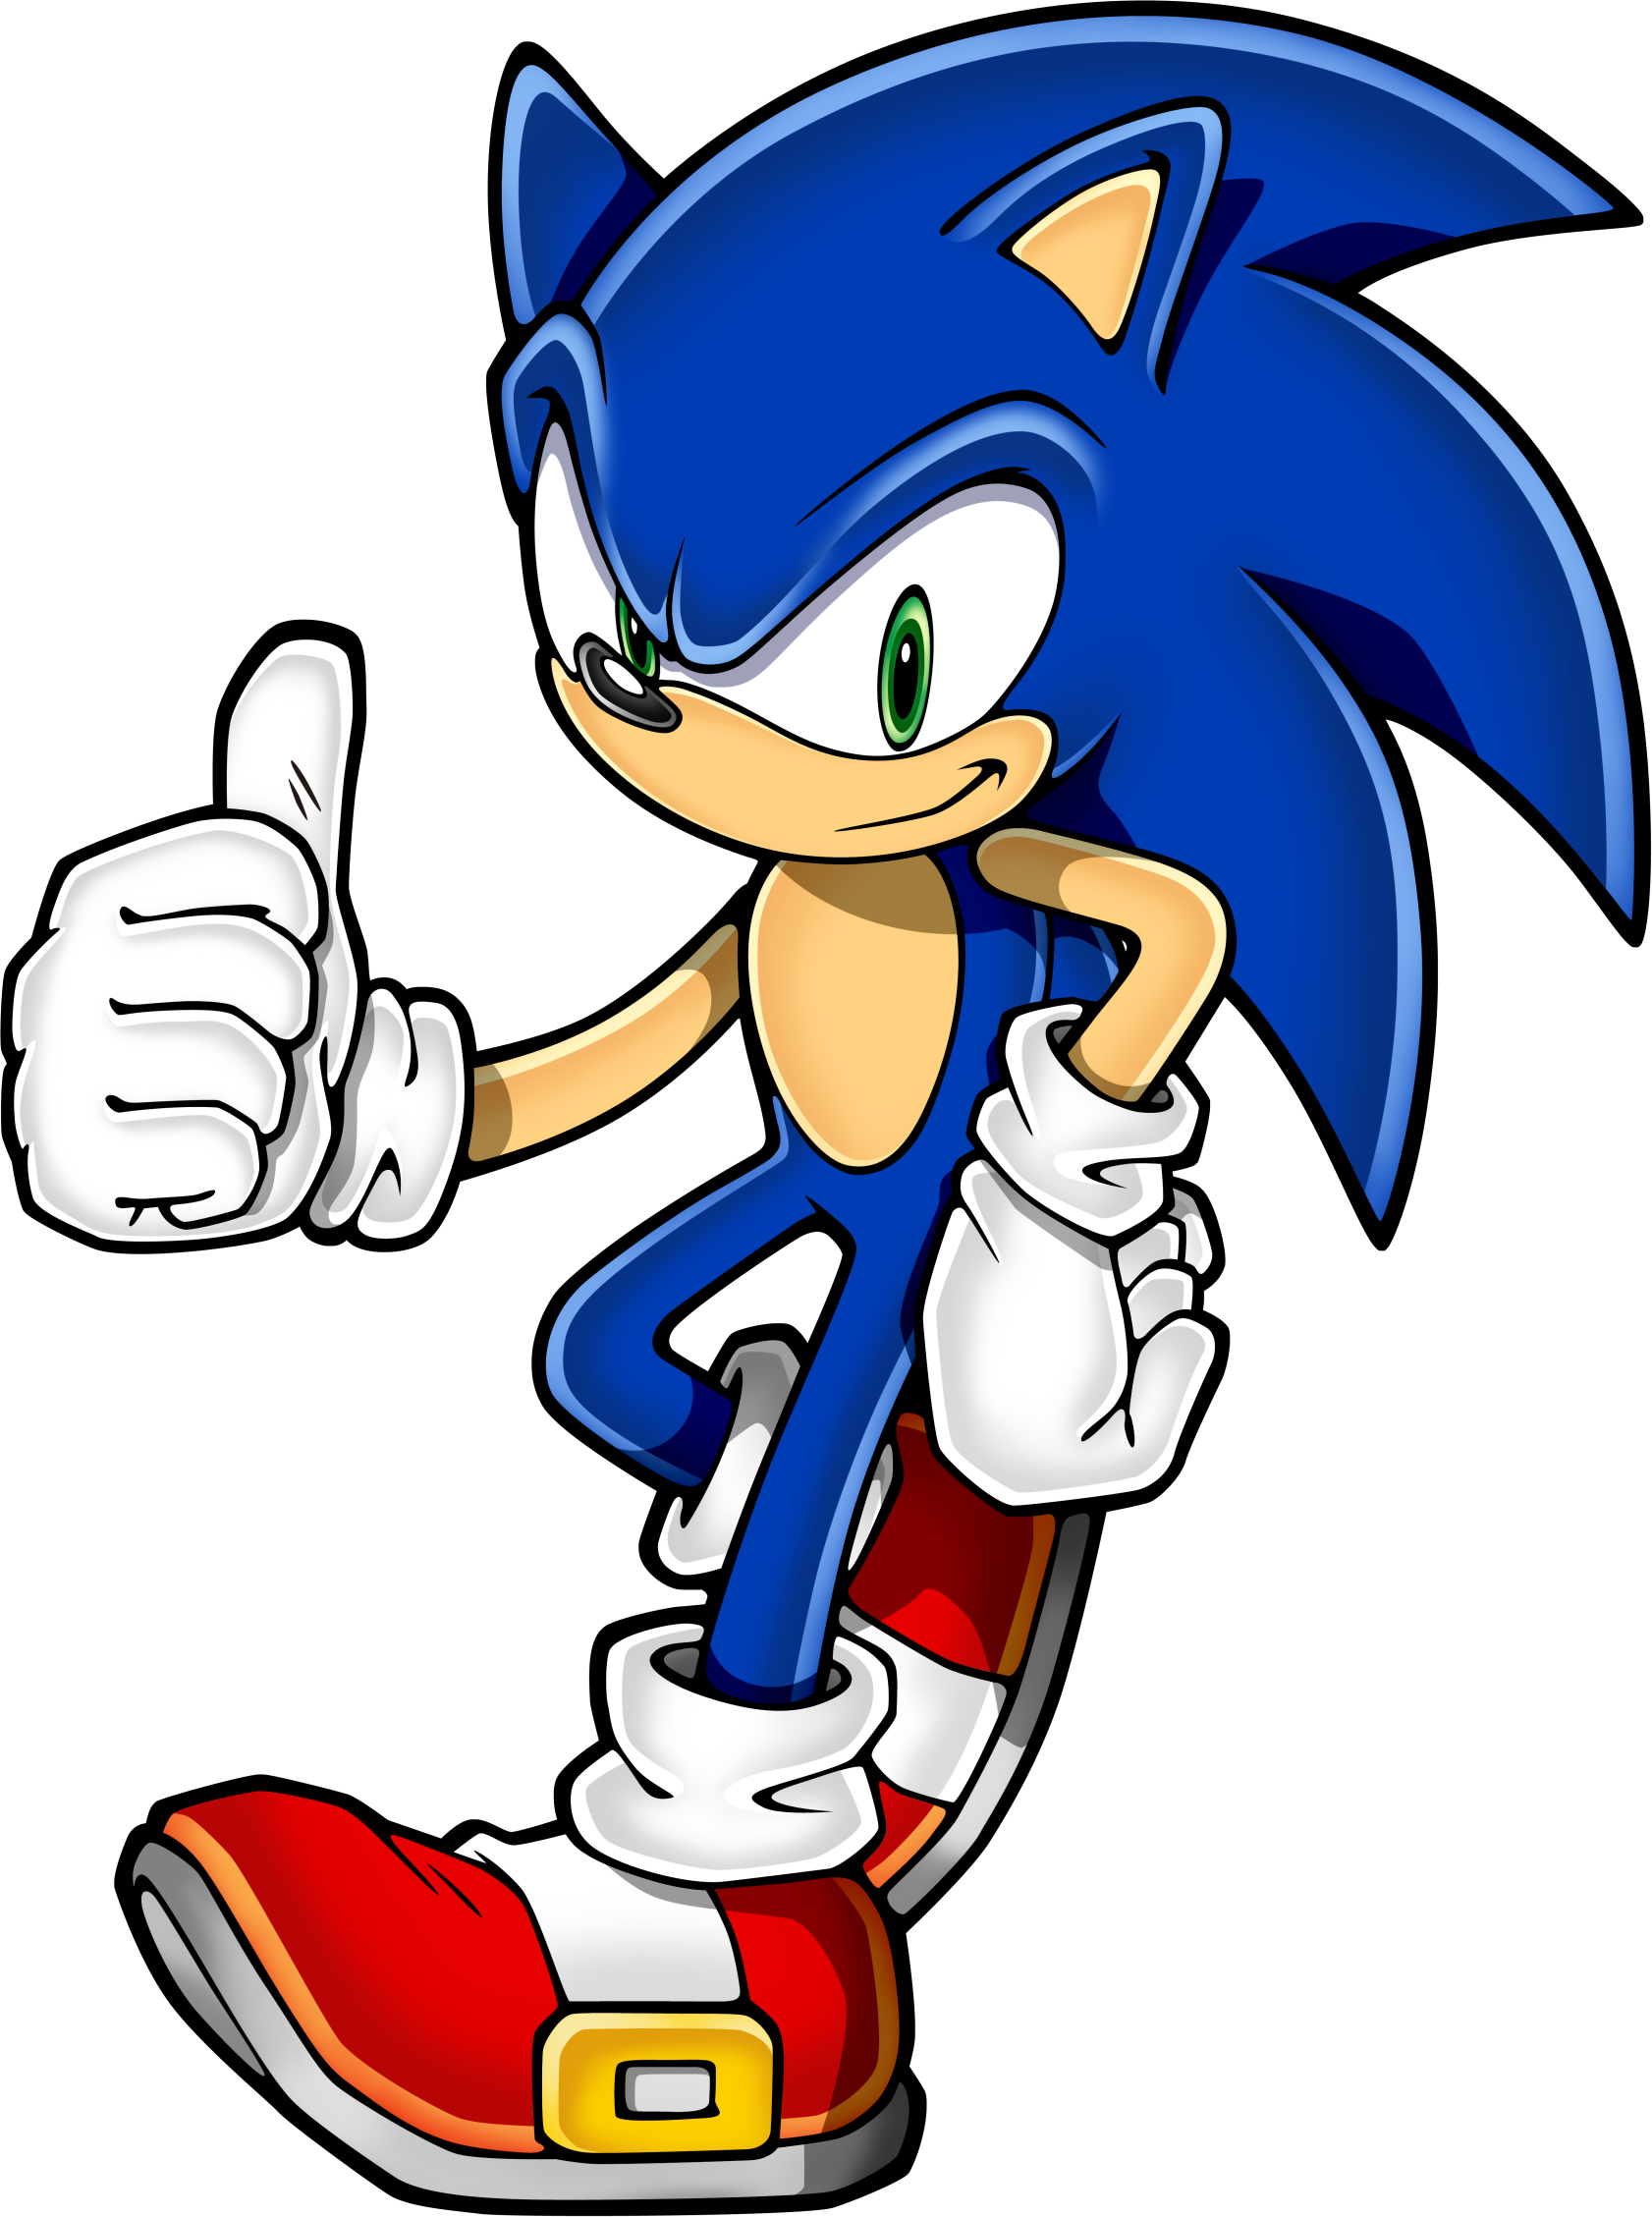 Sonic Art Assets Dvd   Sonic The Hedgehog   6.png - Hedgehog, Transparent background PNG HD thumbnail